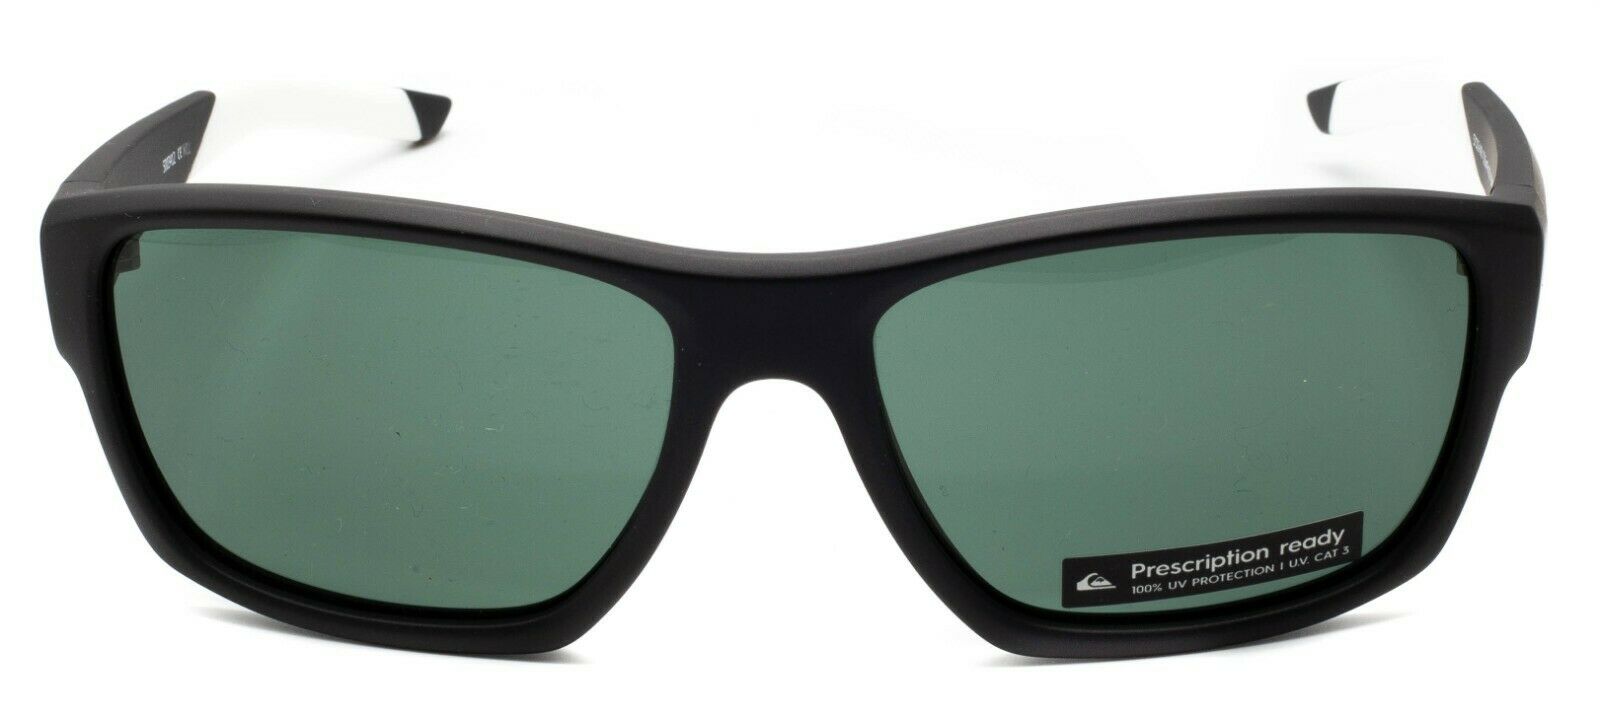 Sunglasses - 30802957 109 Glasses Cat. QS 57mm Eyewear Sun QUIKSILVER Rx GGV 3 Eyewear Shades